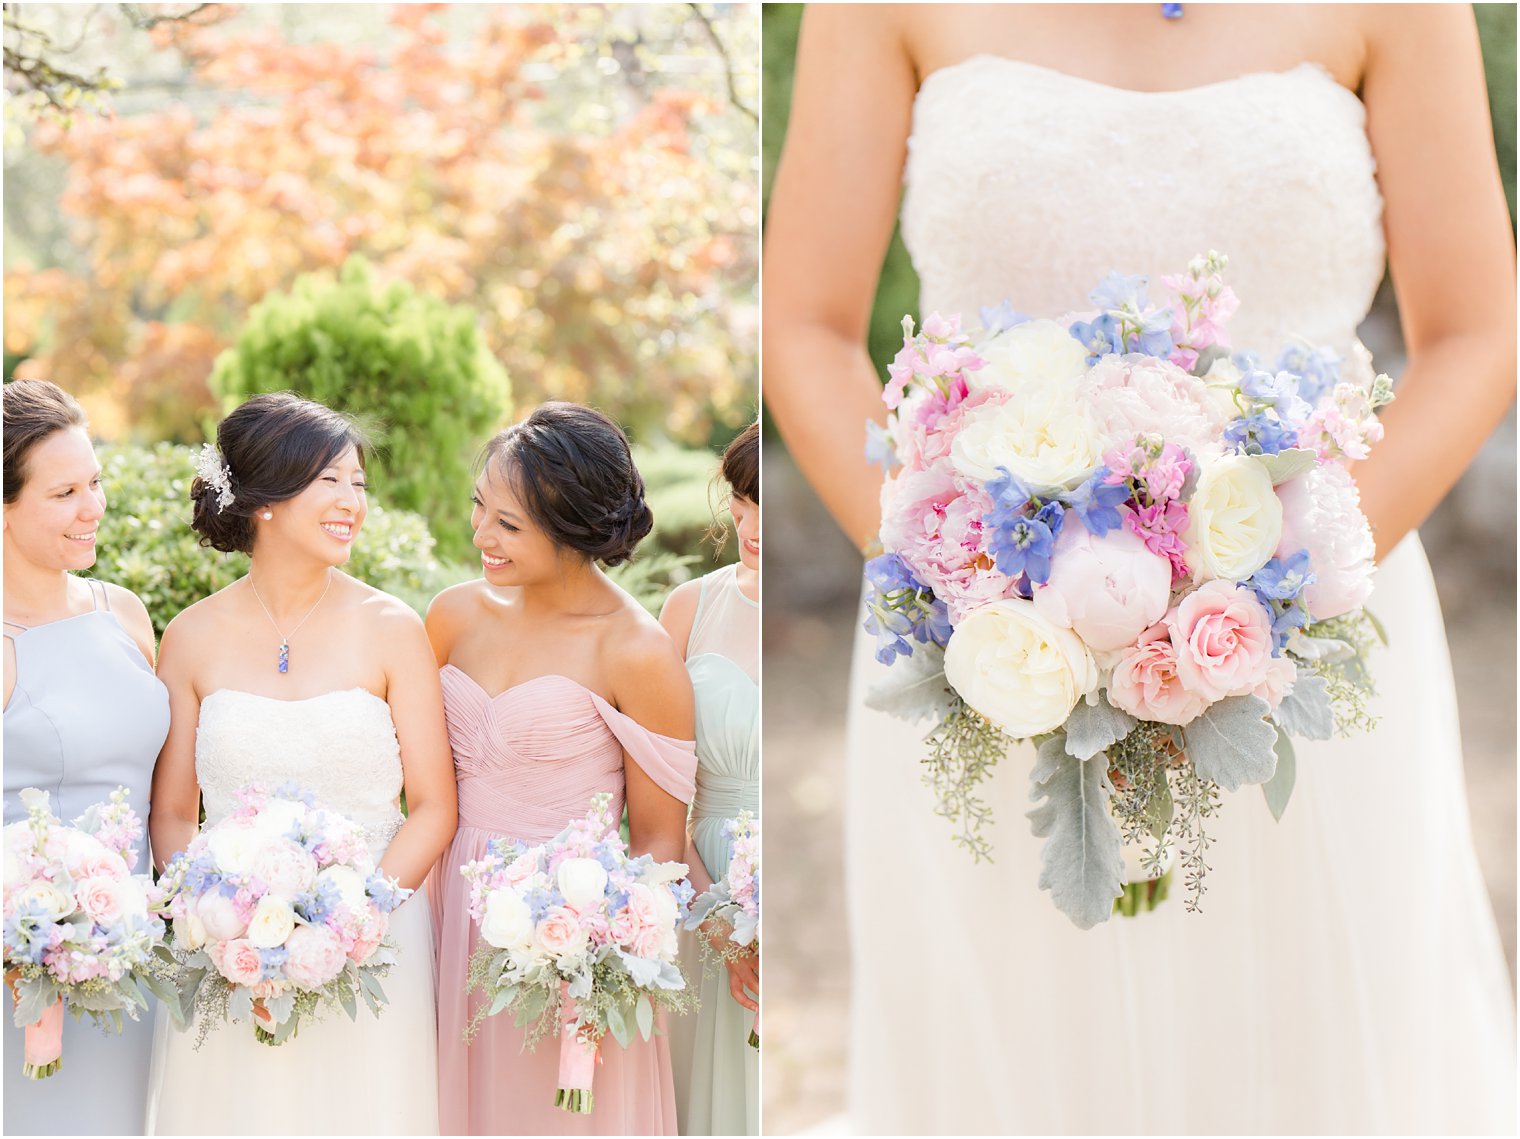 Ivory, pink rose and purple wedding bouquet by Secret Garden